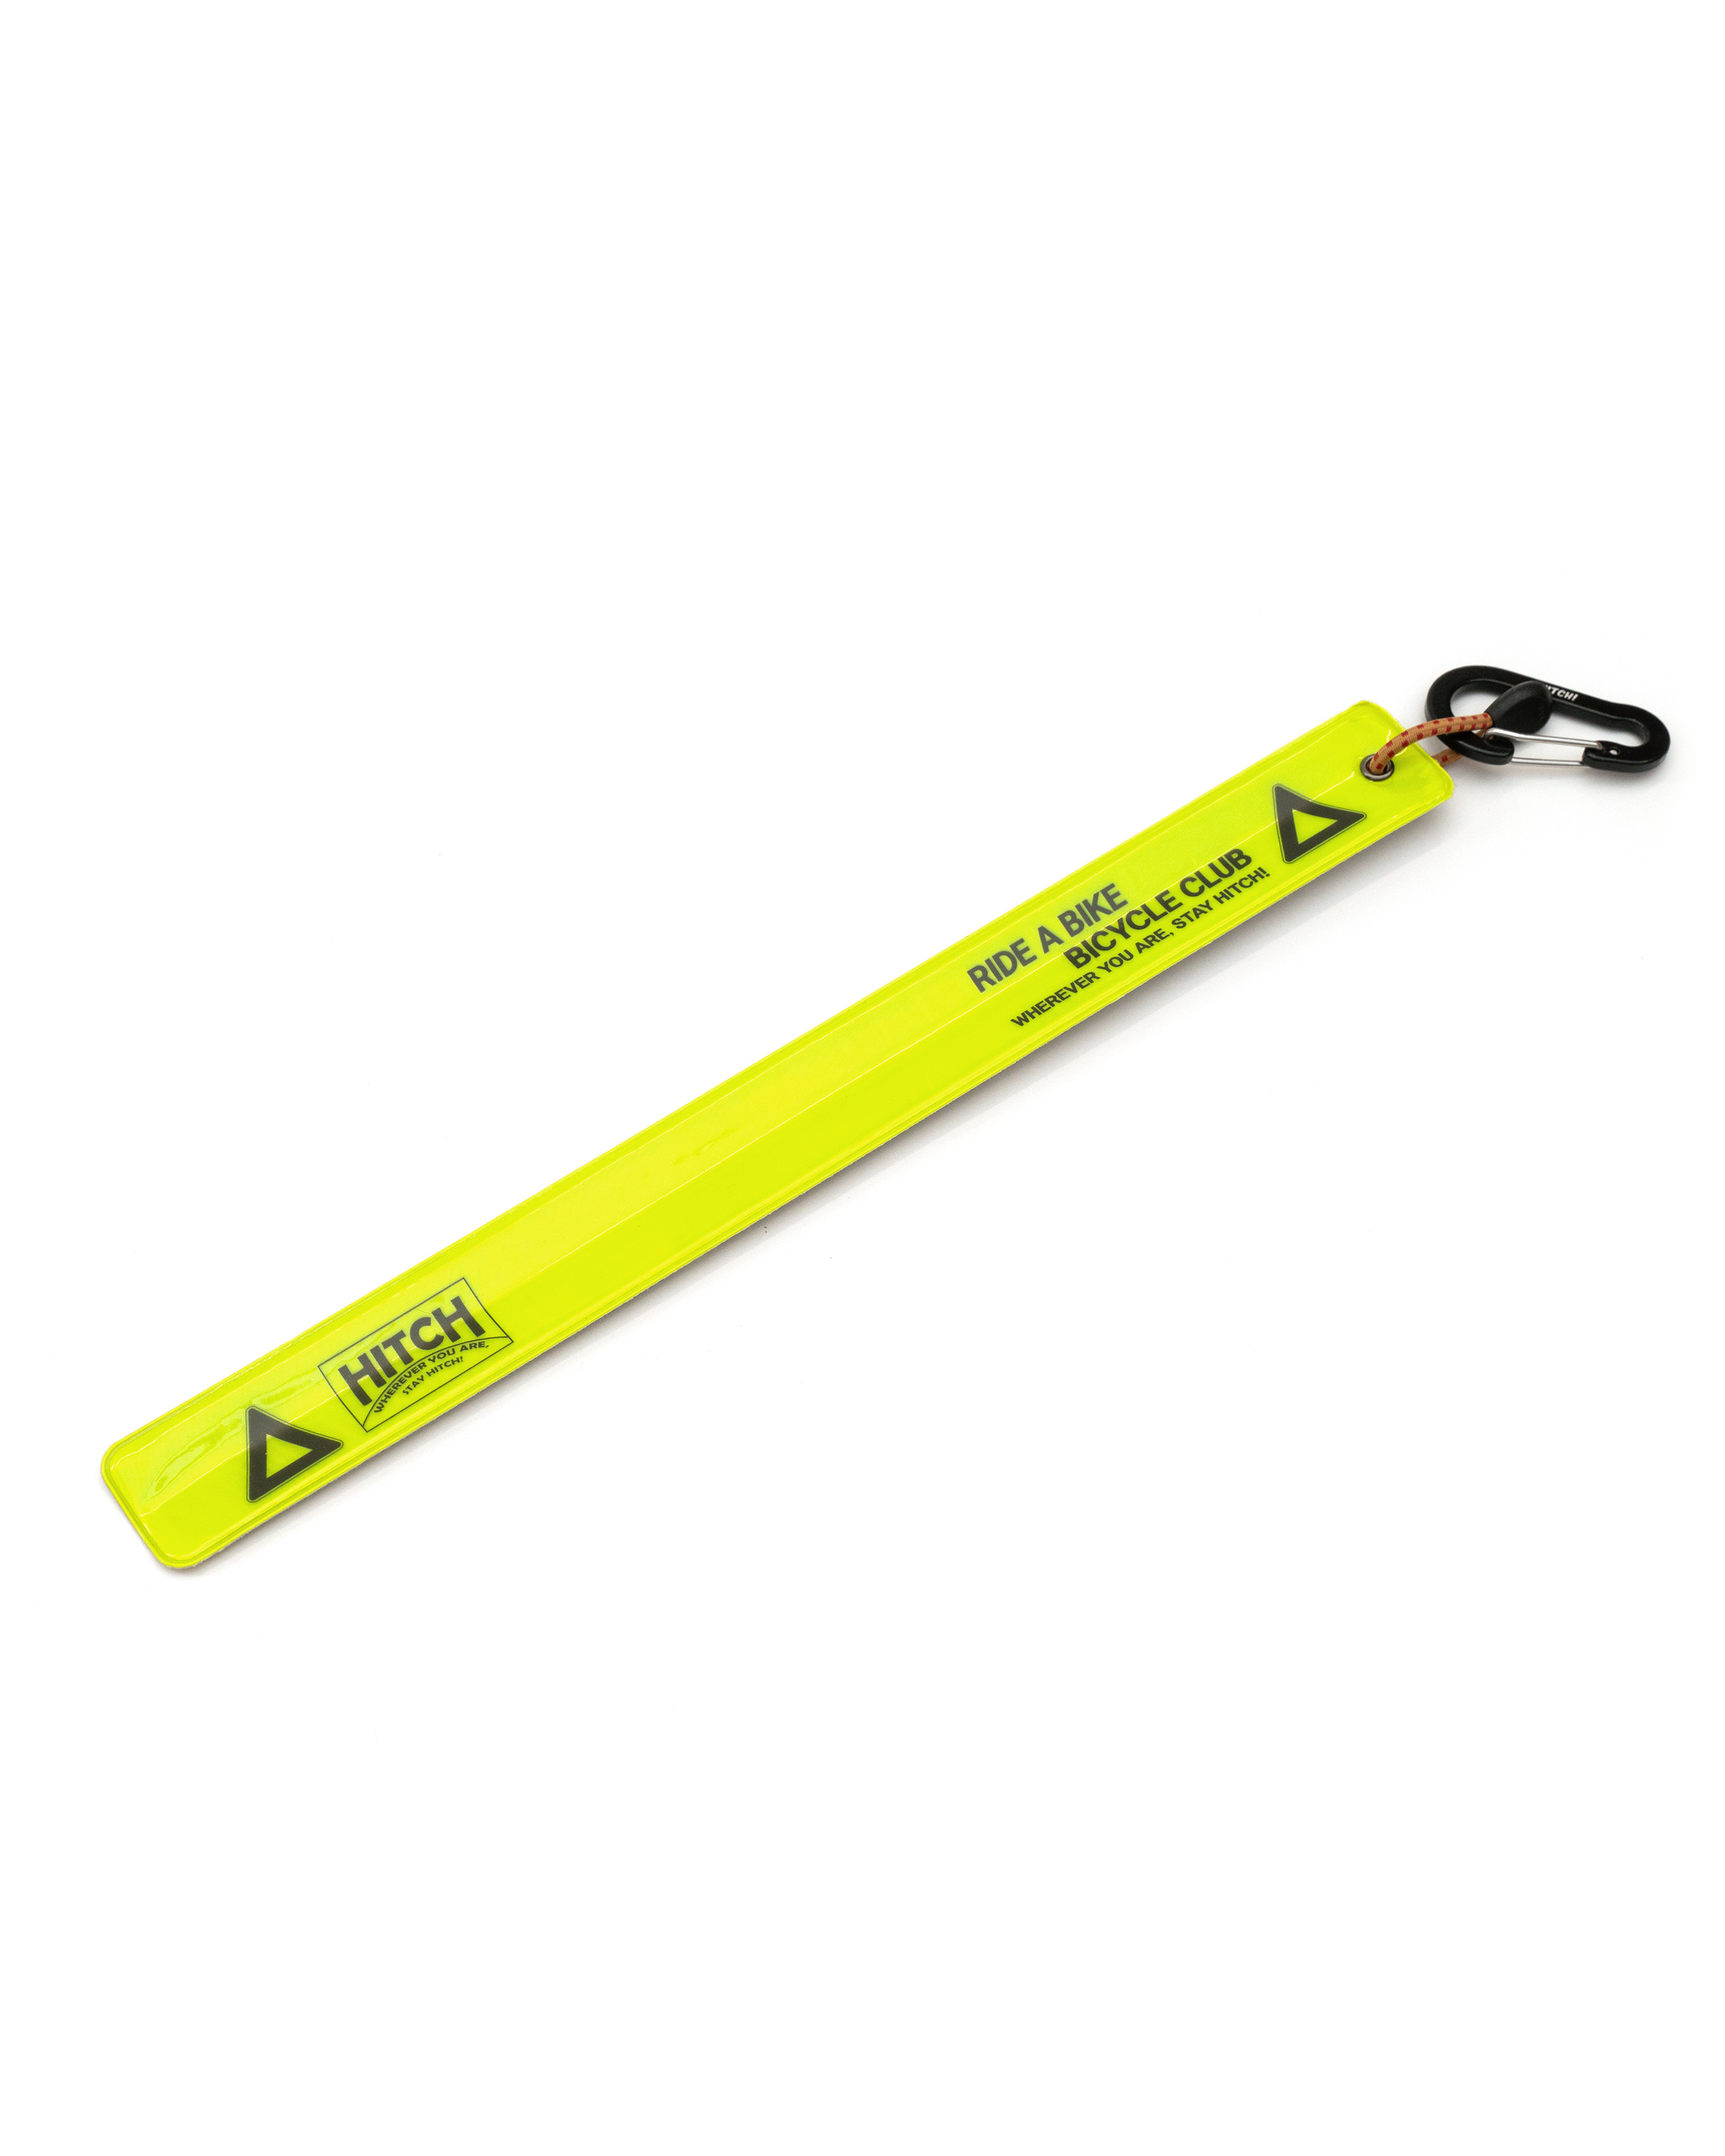 [out of stock] Reflector slapband - neon yellow